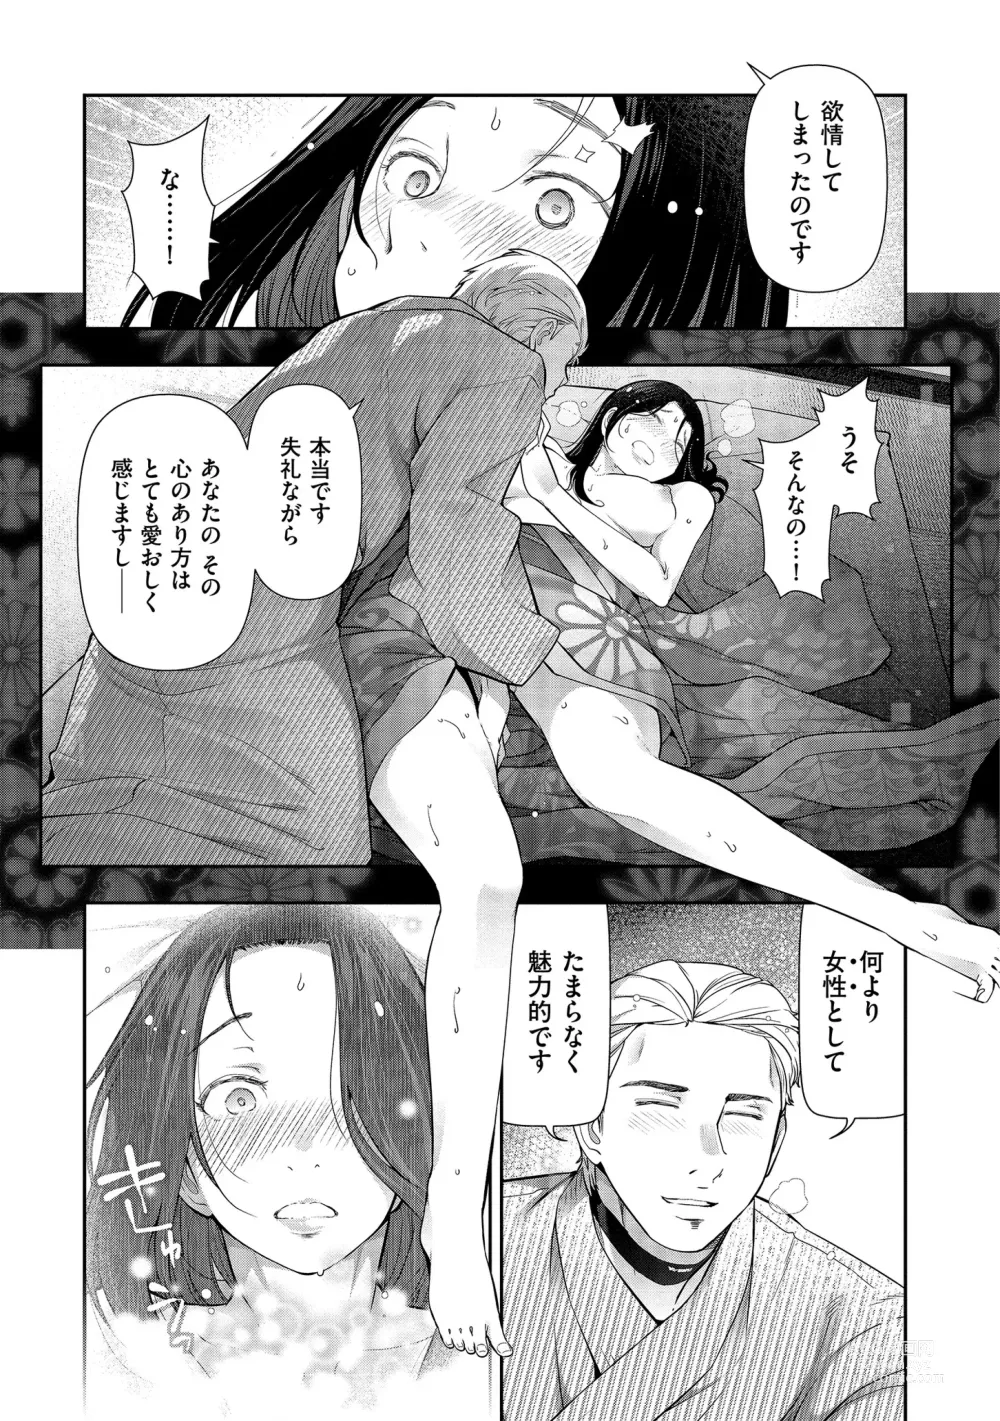 Page 19 of manga Shiawase no Kuni